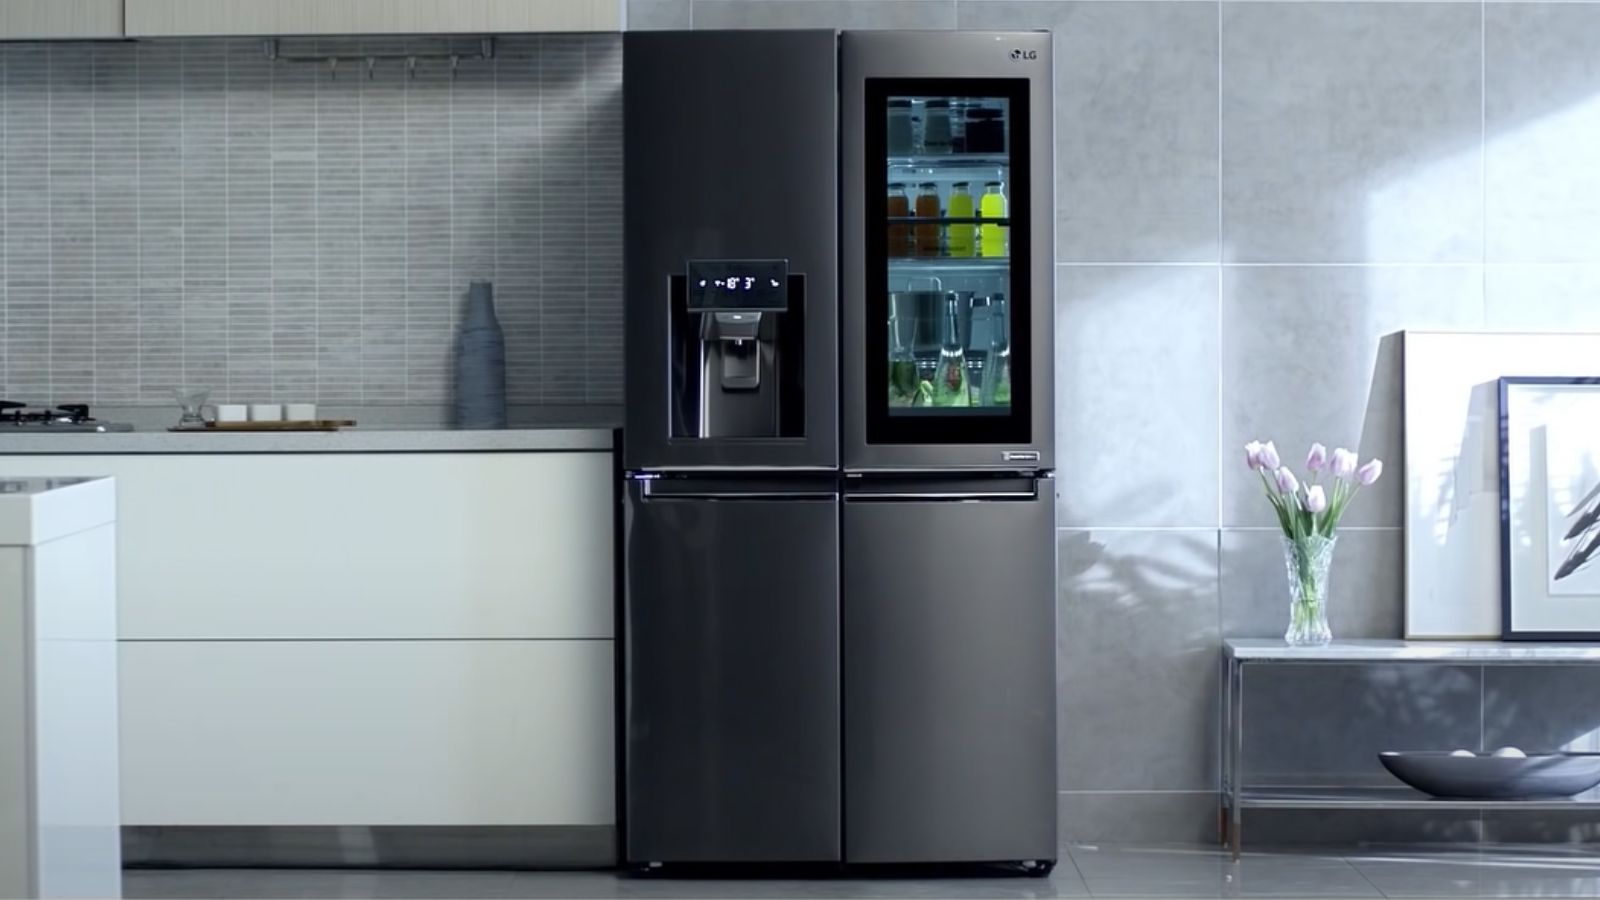 Refrigeradora LG Top Freezer